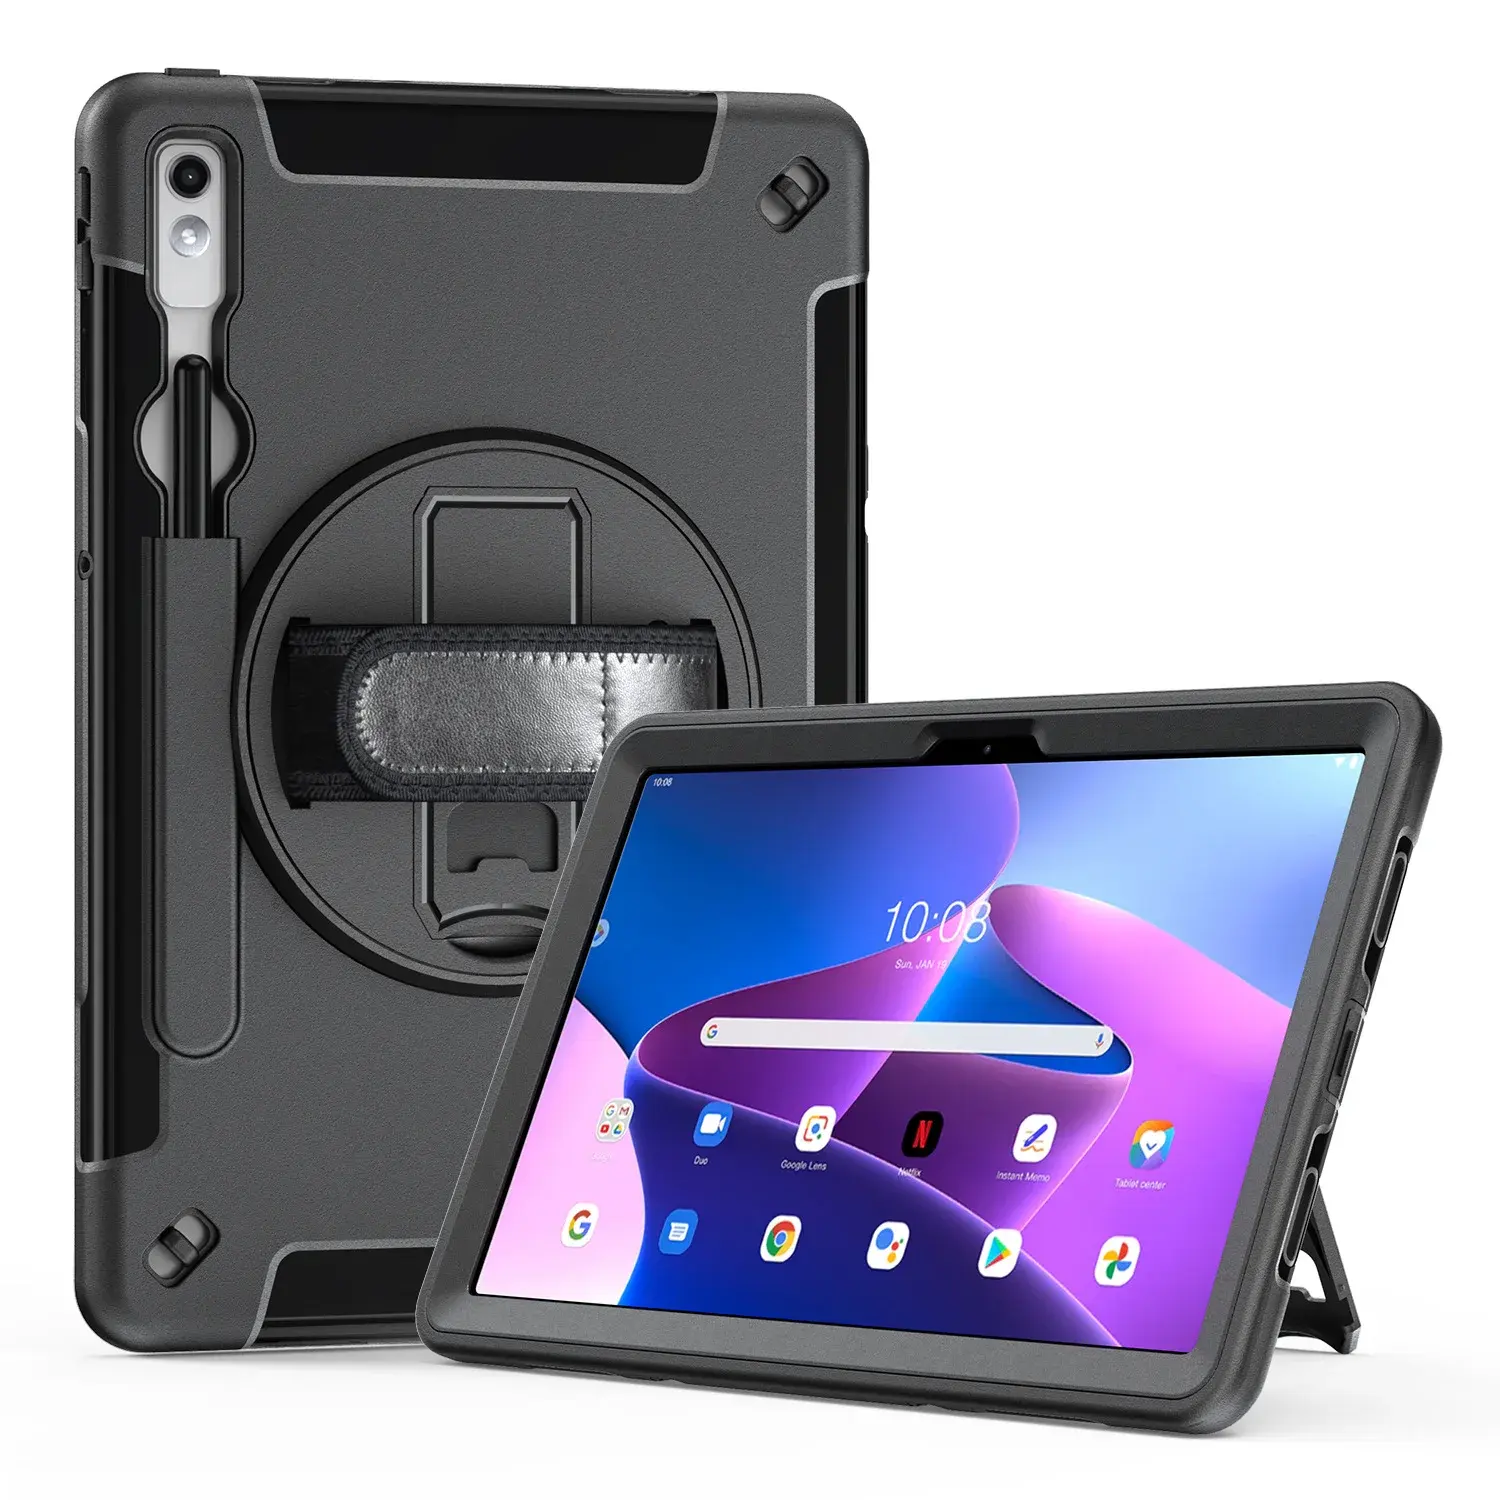 AilesTecca casing Tablet Defender hibrida, casing PC dudukan berputar 360 inci untuk Samsung Galaxy Tab A7 Lite 8.7 inci tugas berat